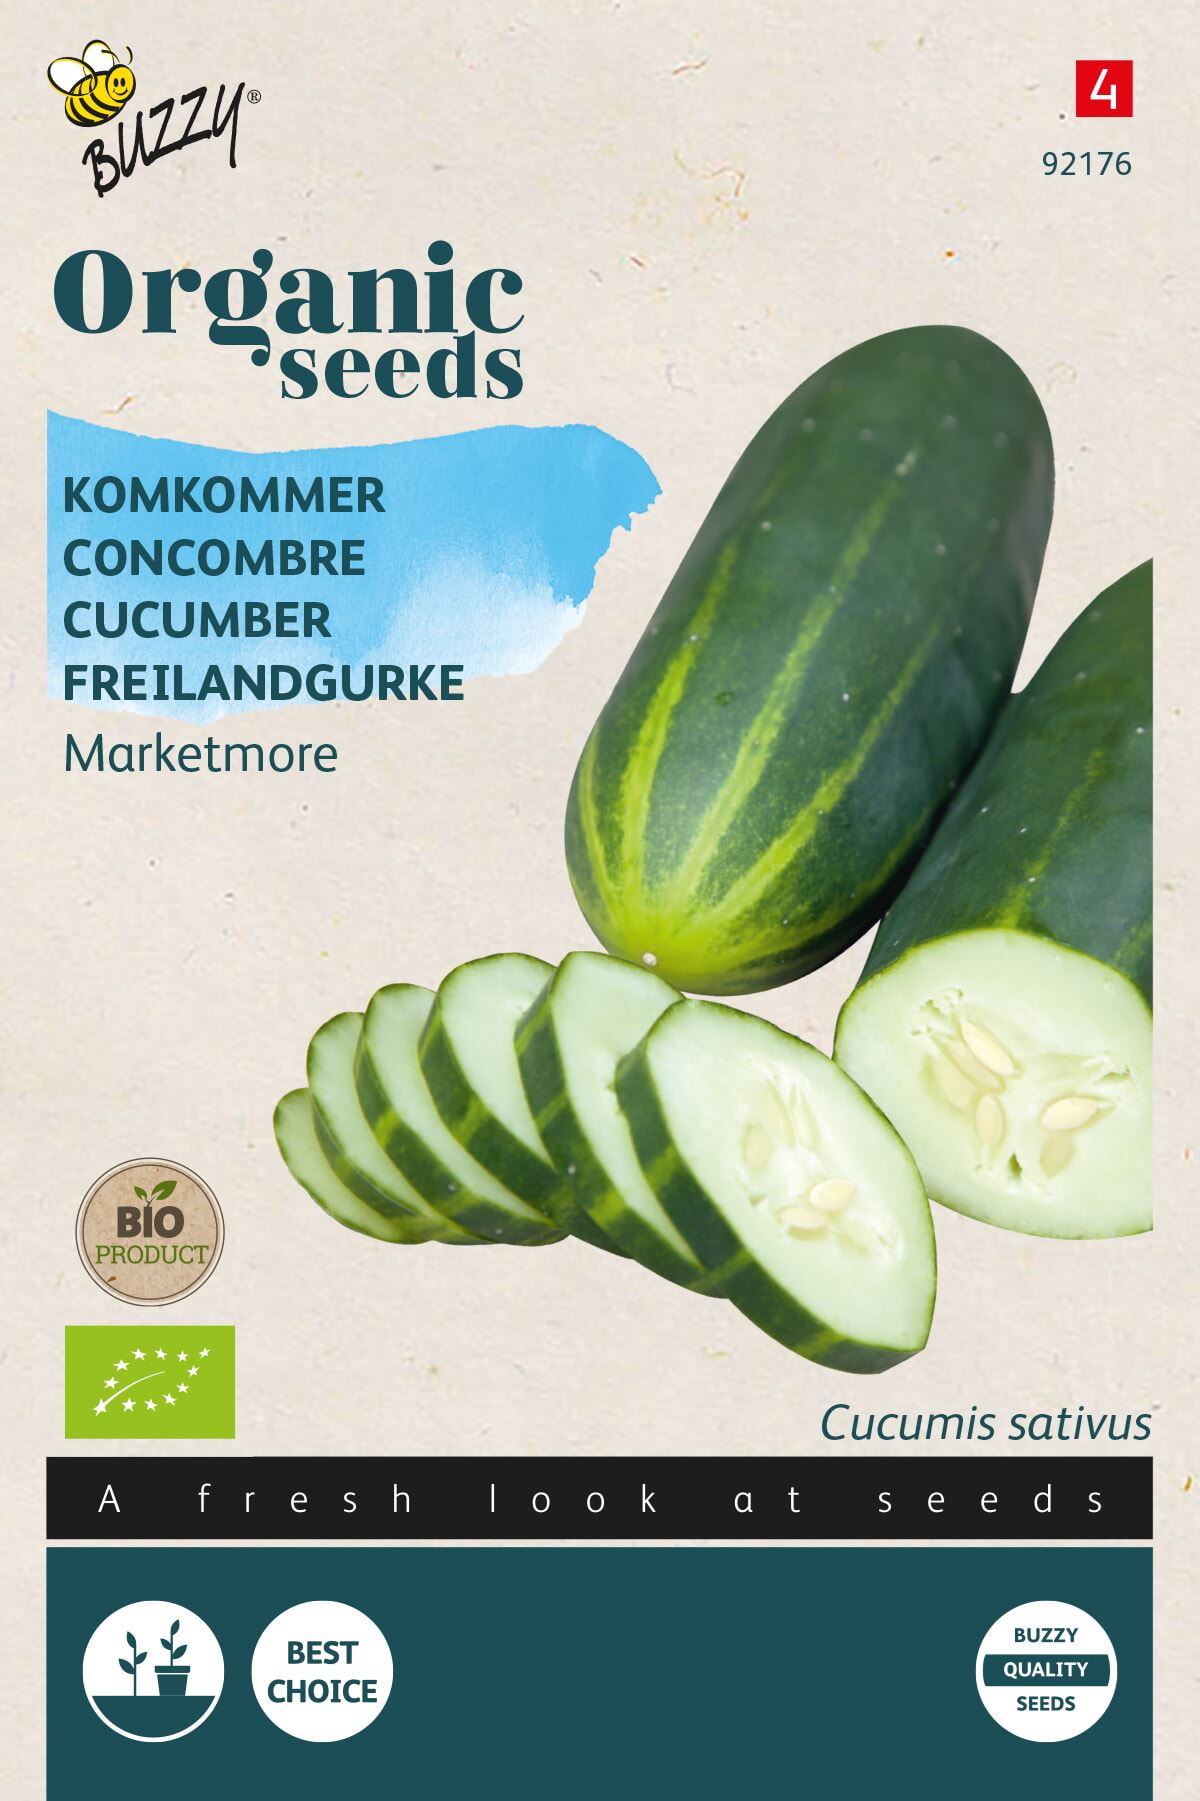 buzzy-organic-komkommer-marketmore-skal-14725-